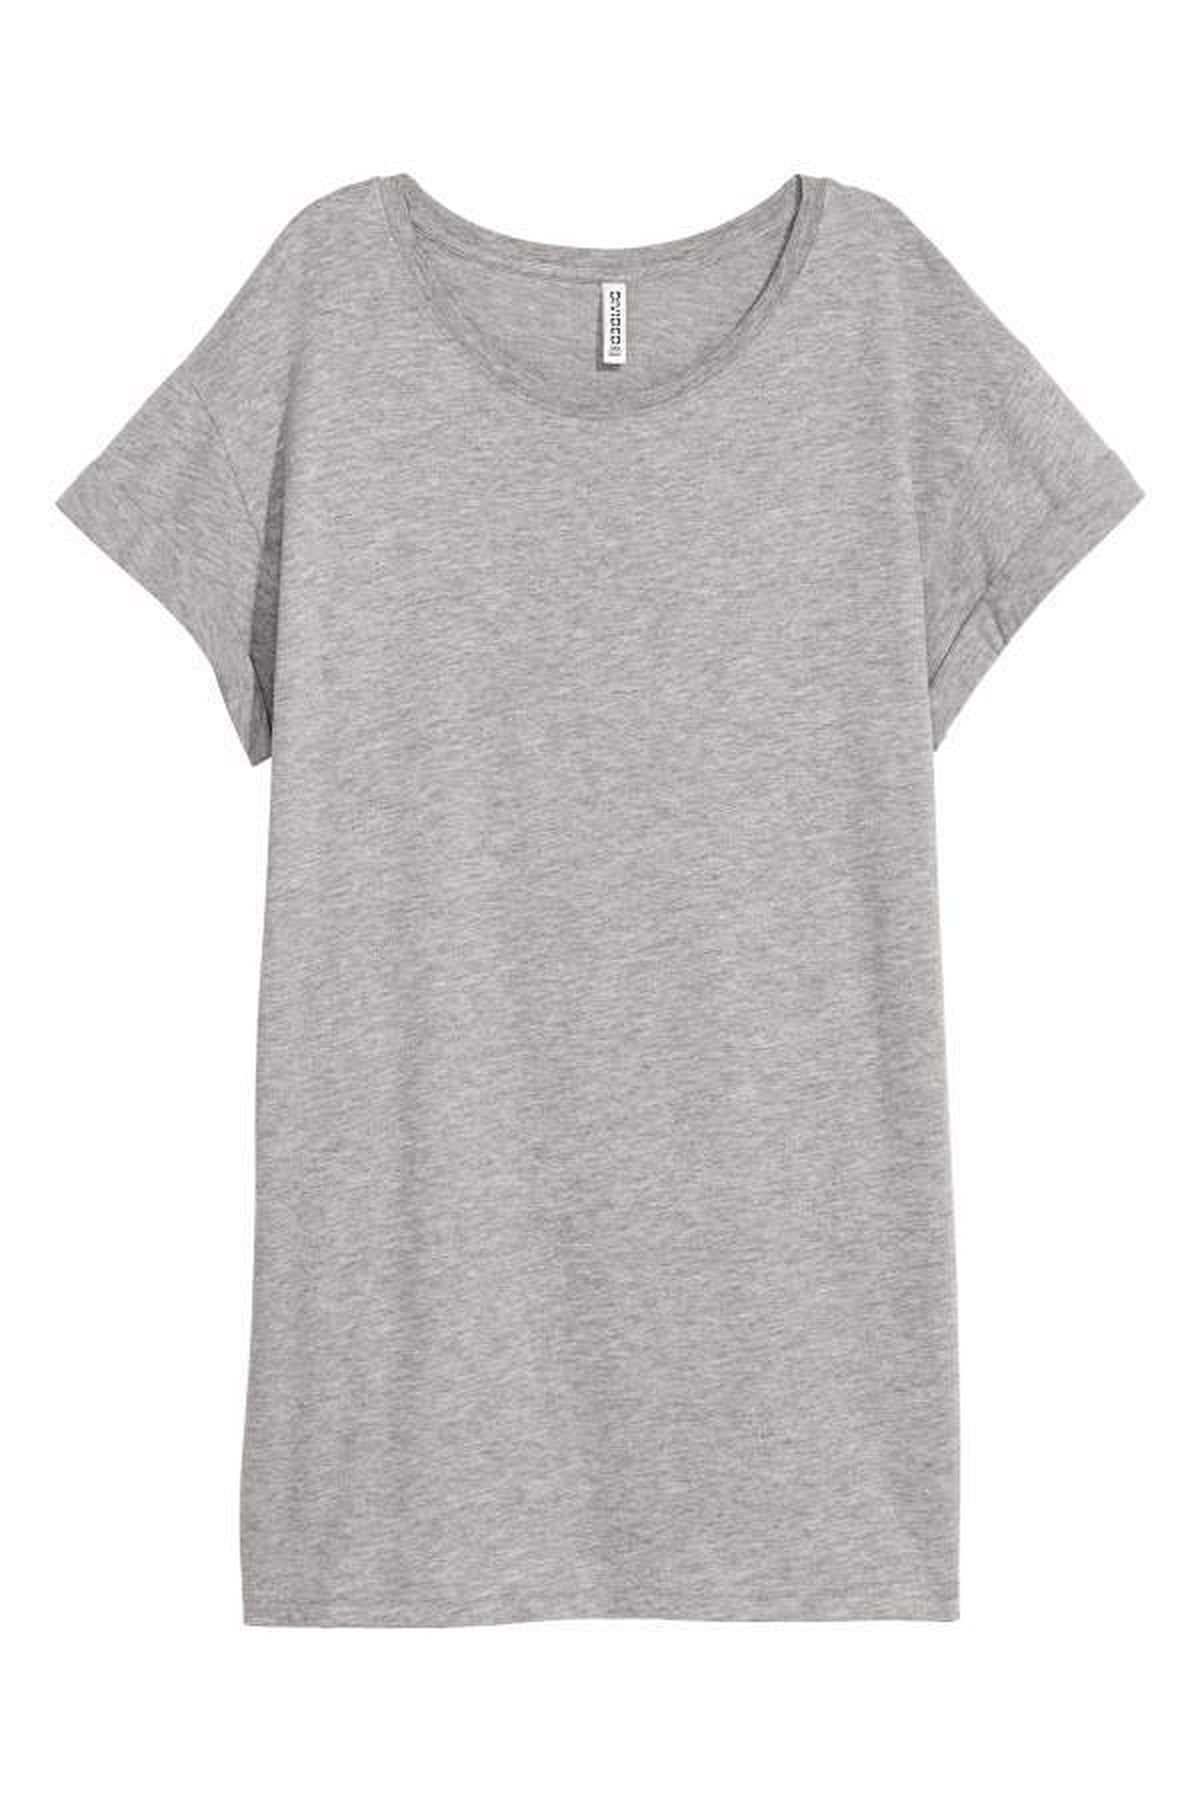 Jennifer Lawrence Wearing Gray T-Shirt and Slip | POPSUGAR Fashion